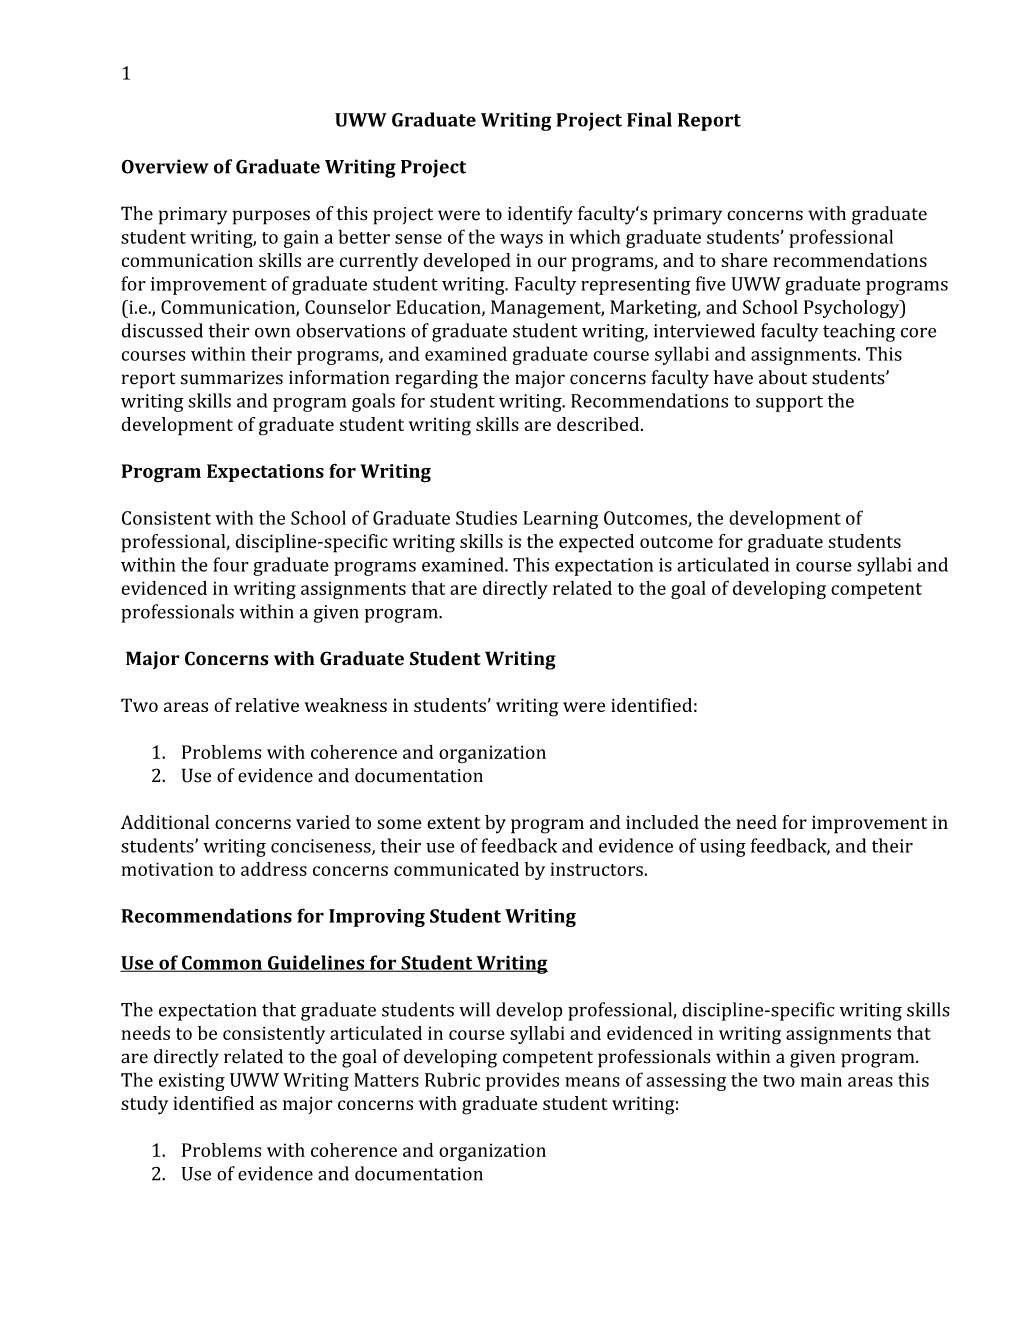 UWW Graduate Writing Projectfinal Report